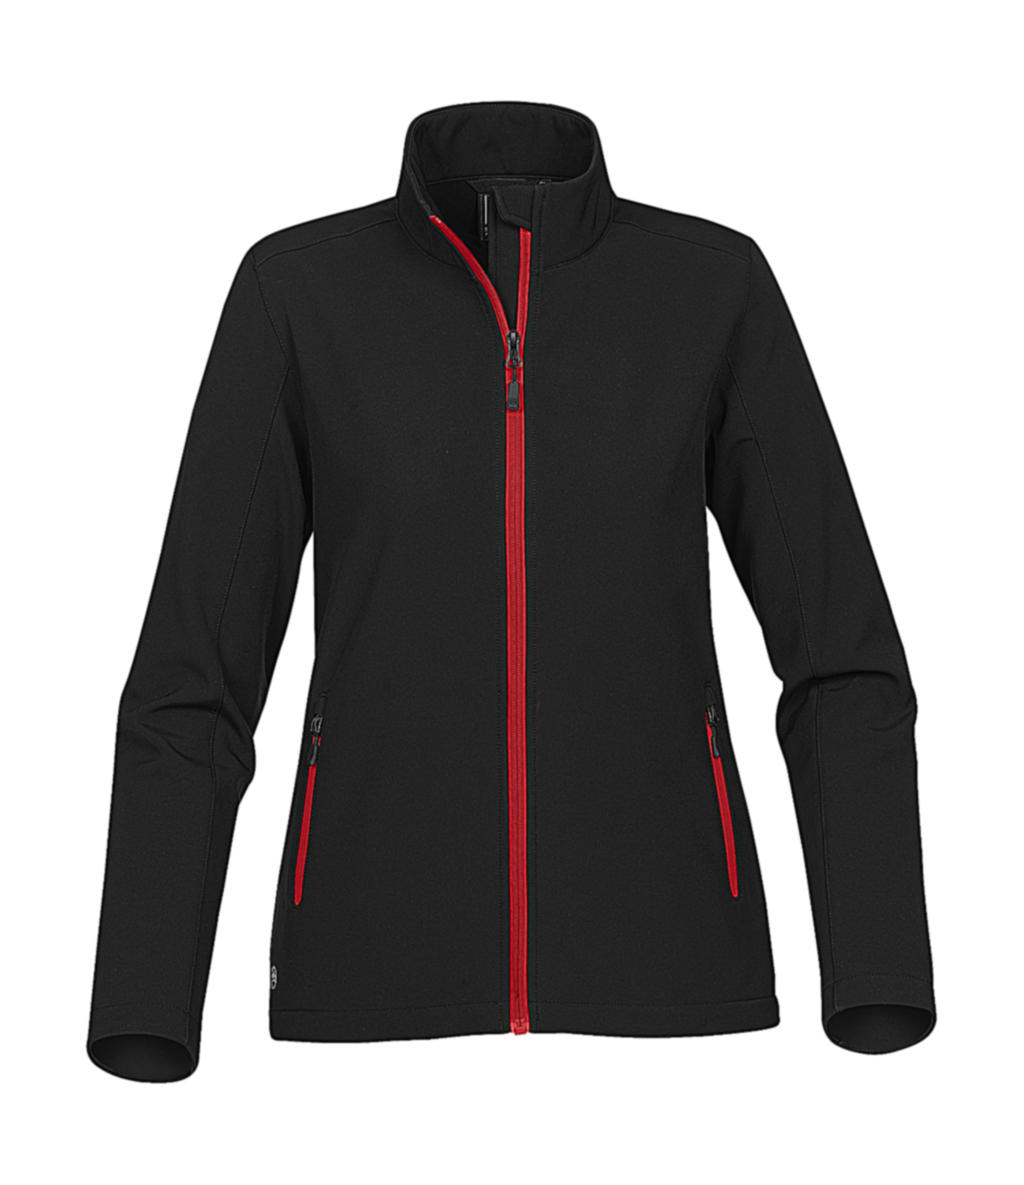  Womens Orbiter Softshell Jacket in Farbe Black/Bright Red